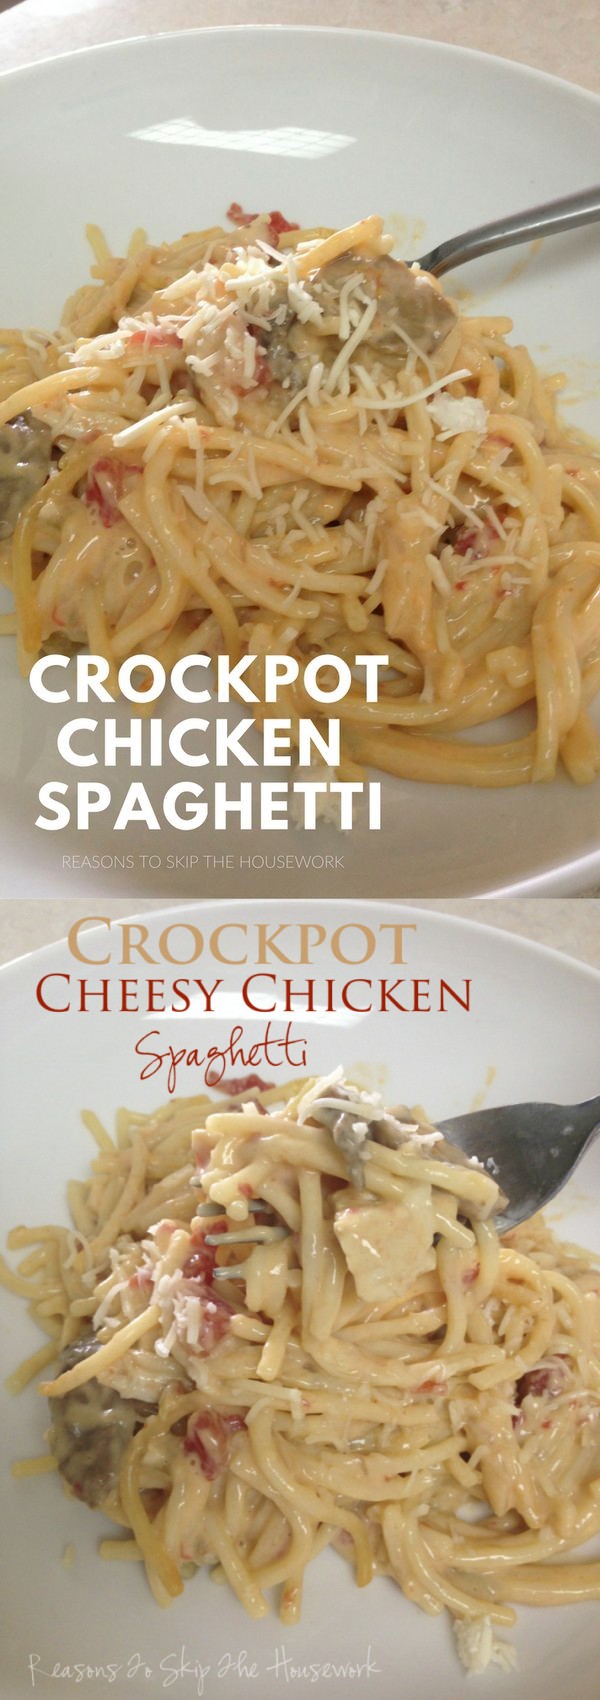 Crockpot Cheesy Chicken Spaghetti